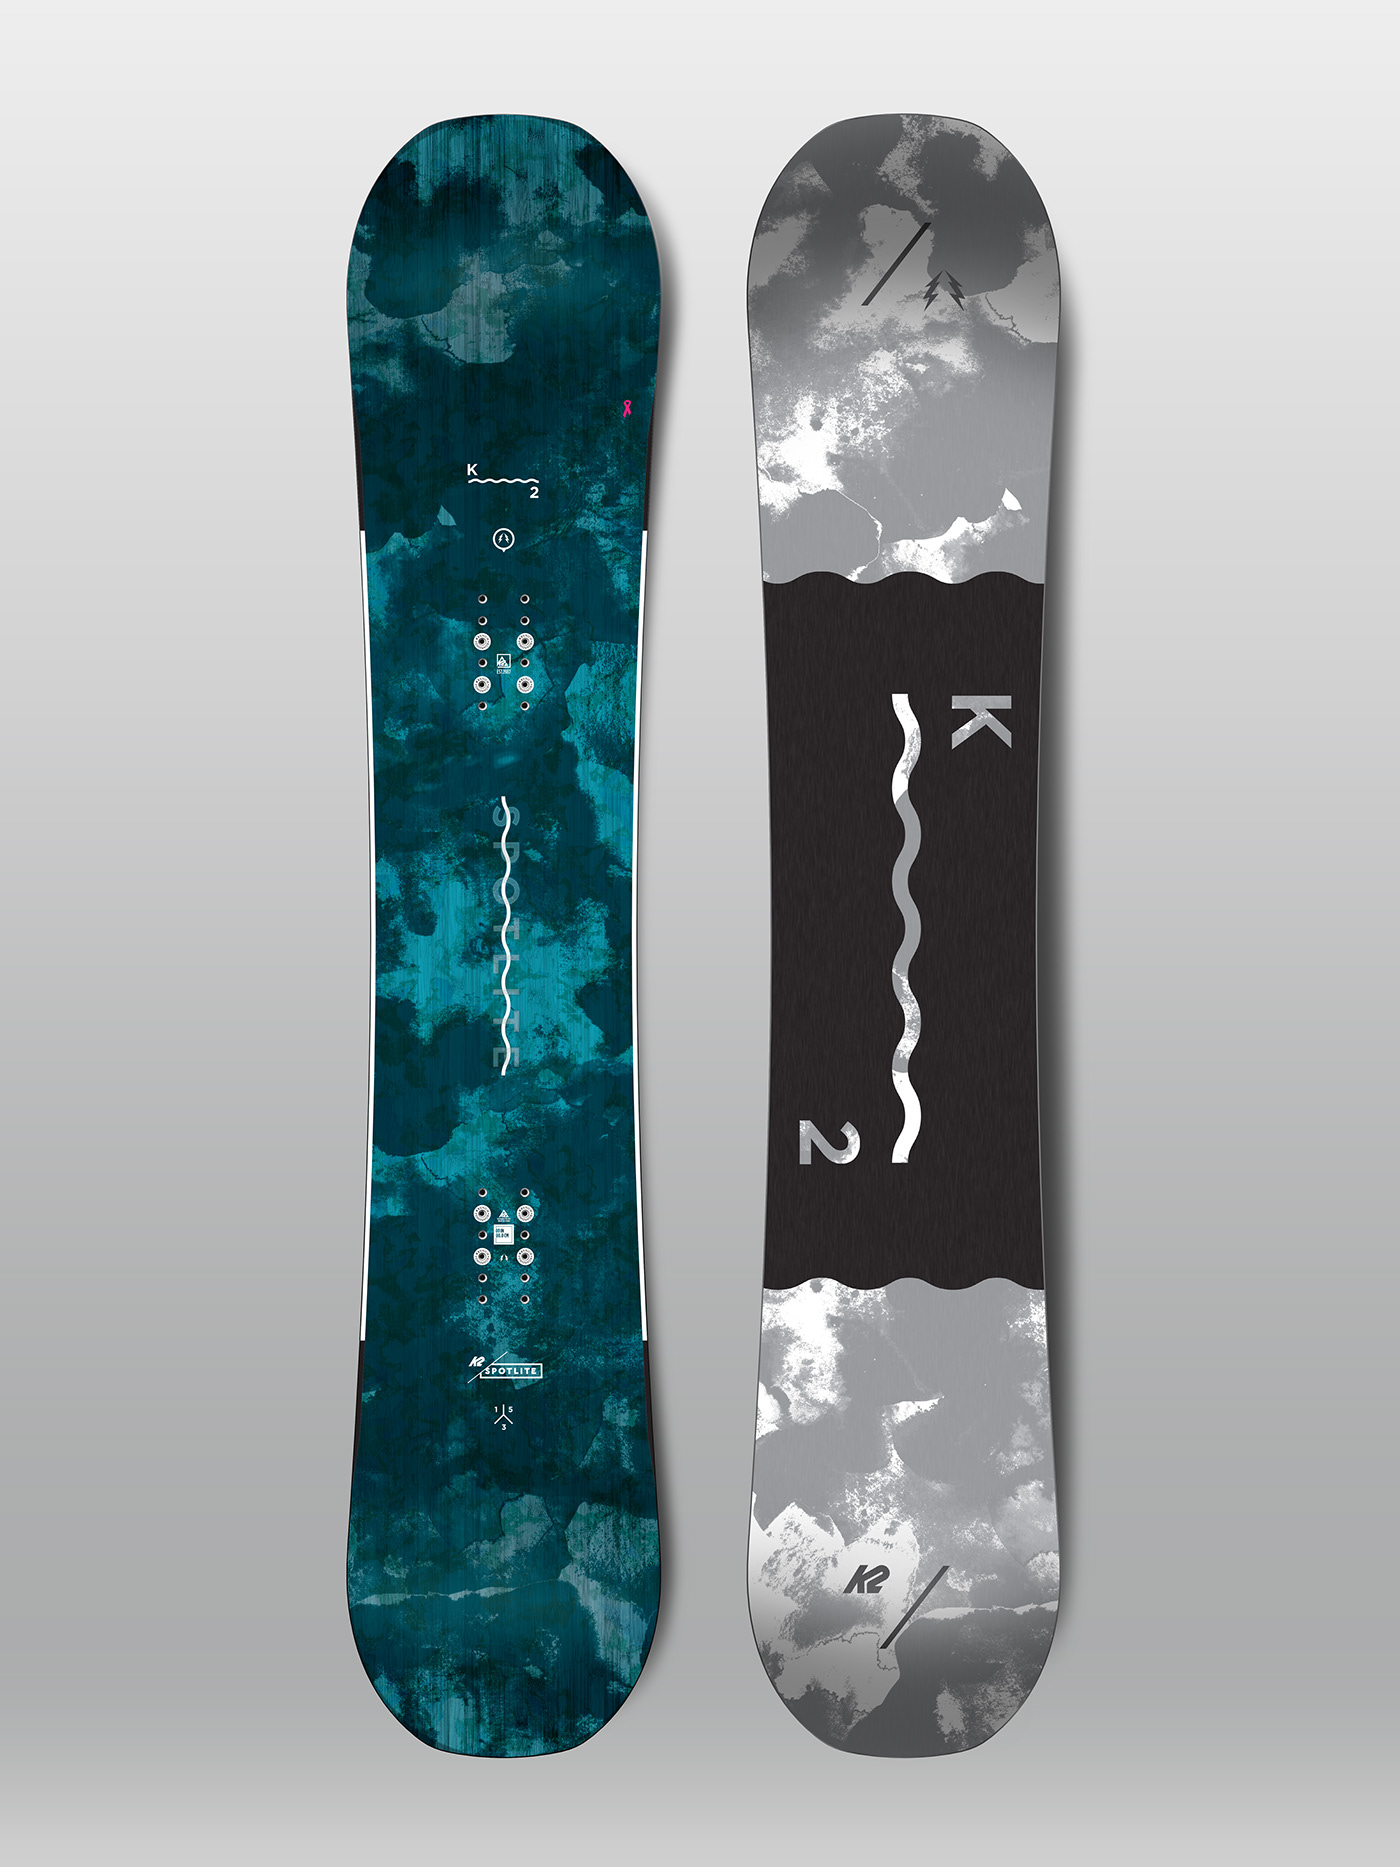 Snowboards product design  K2 k2 snowboarding Snowboarding snowboard graphics branding  graphic design 